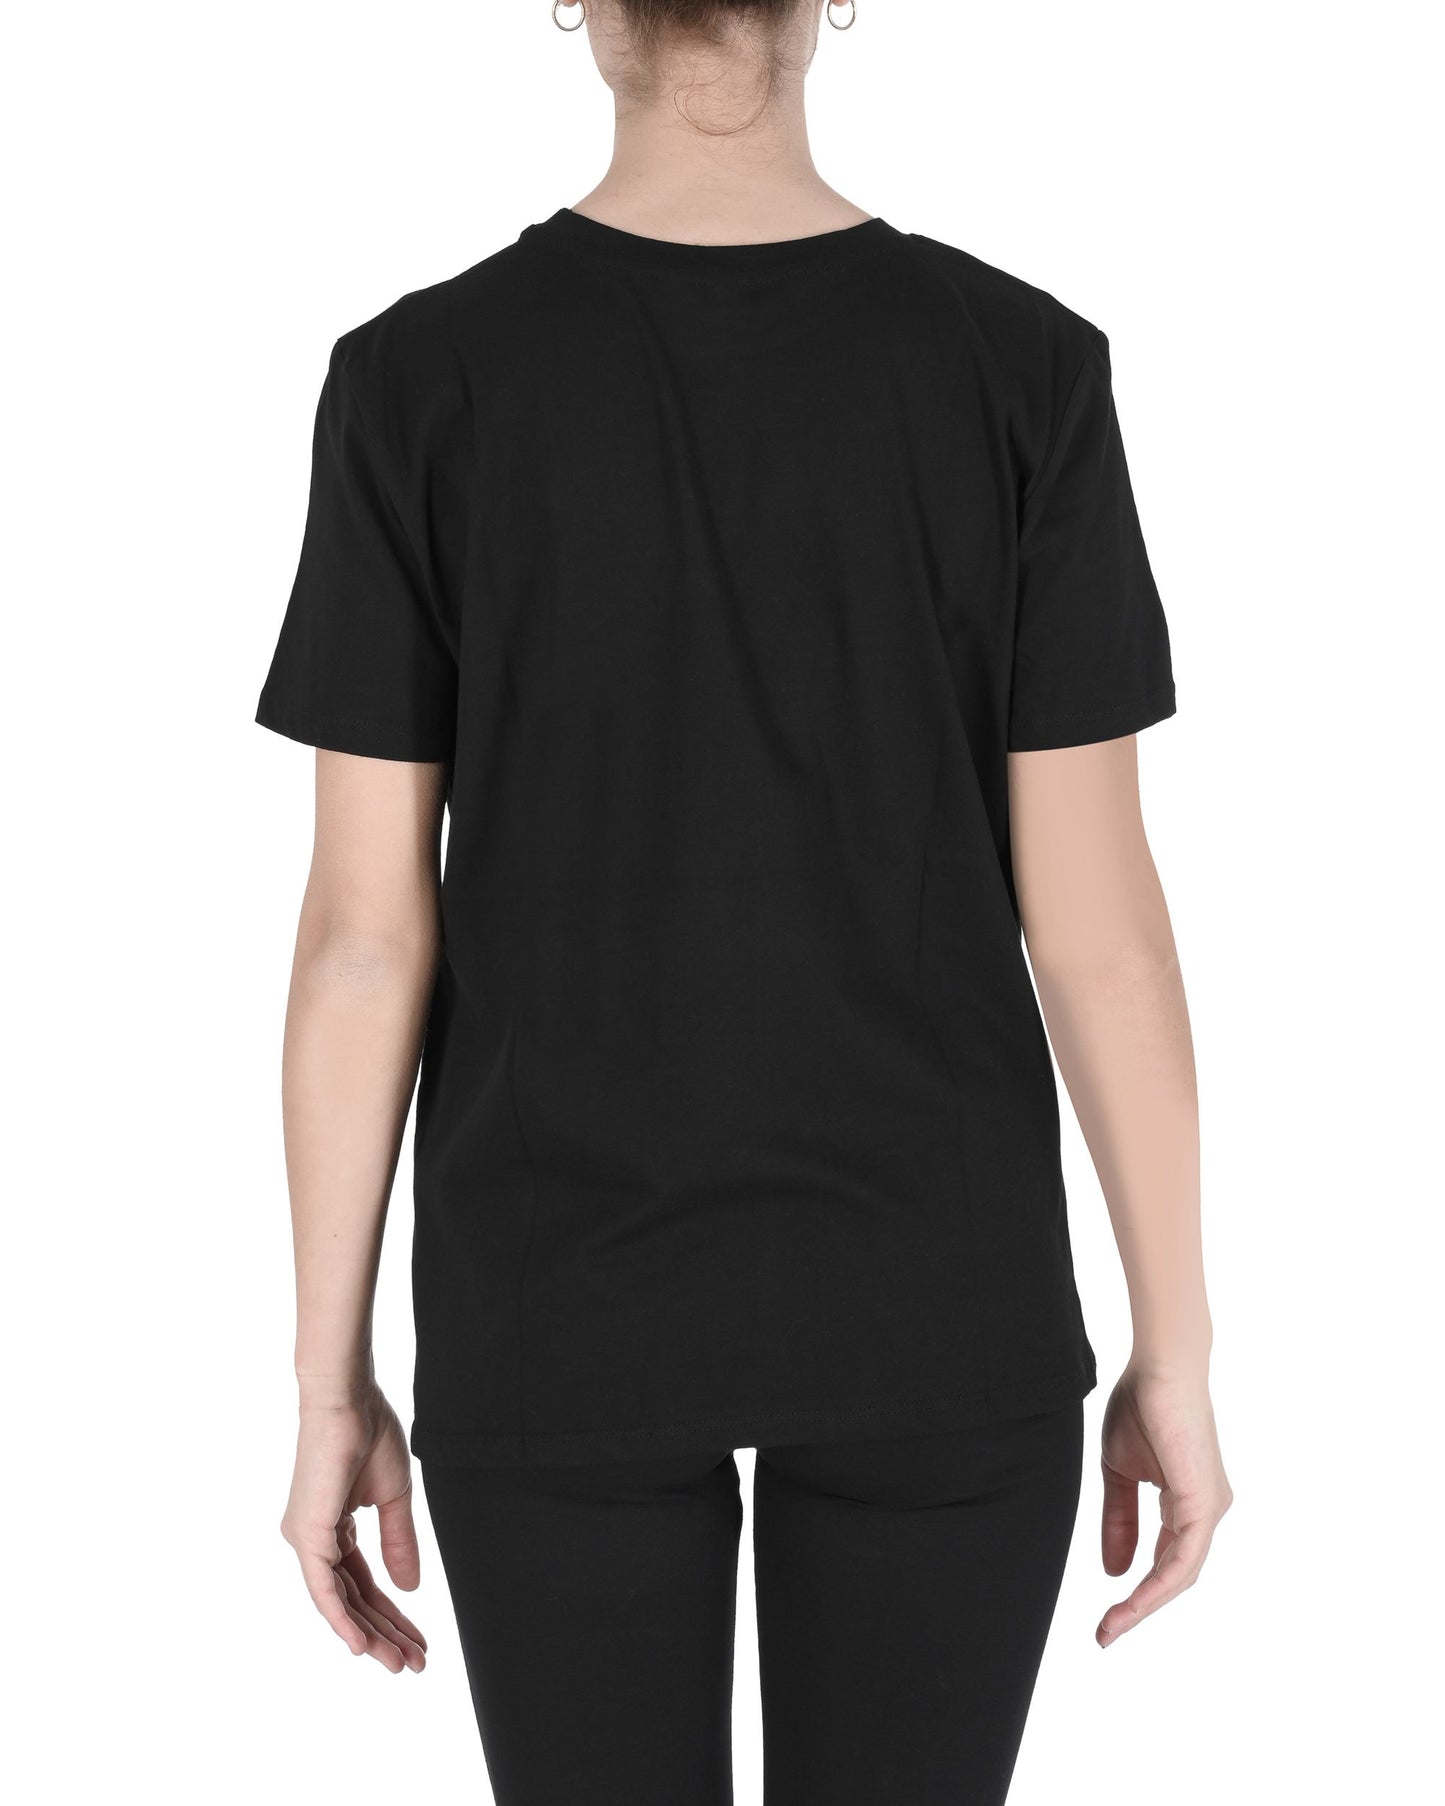 19V69 Italia Womens T-Shirt CERTIFICATE BLACK